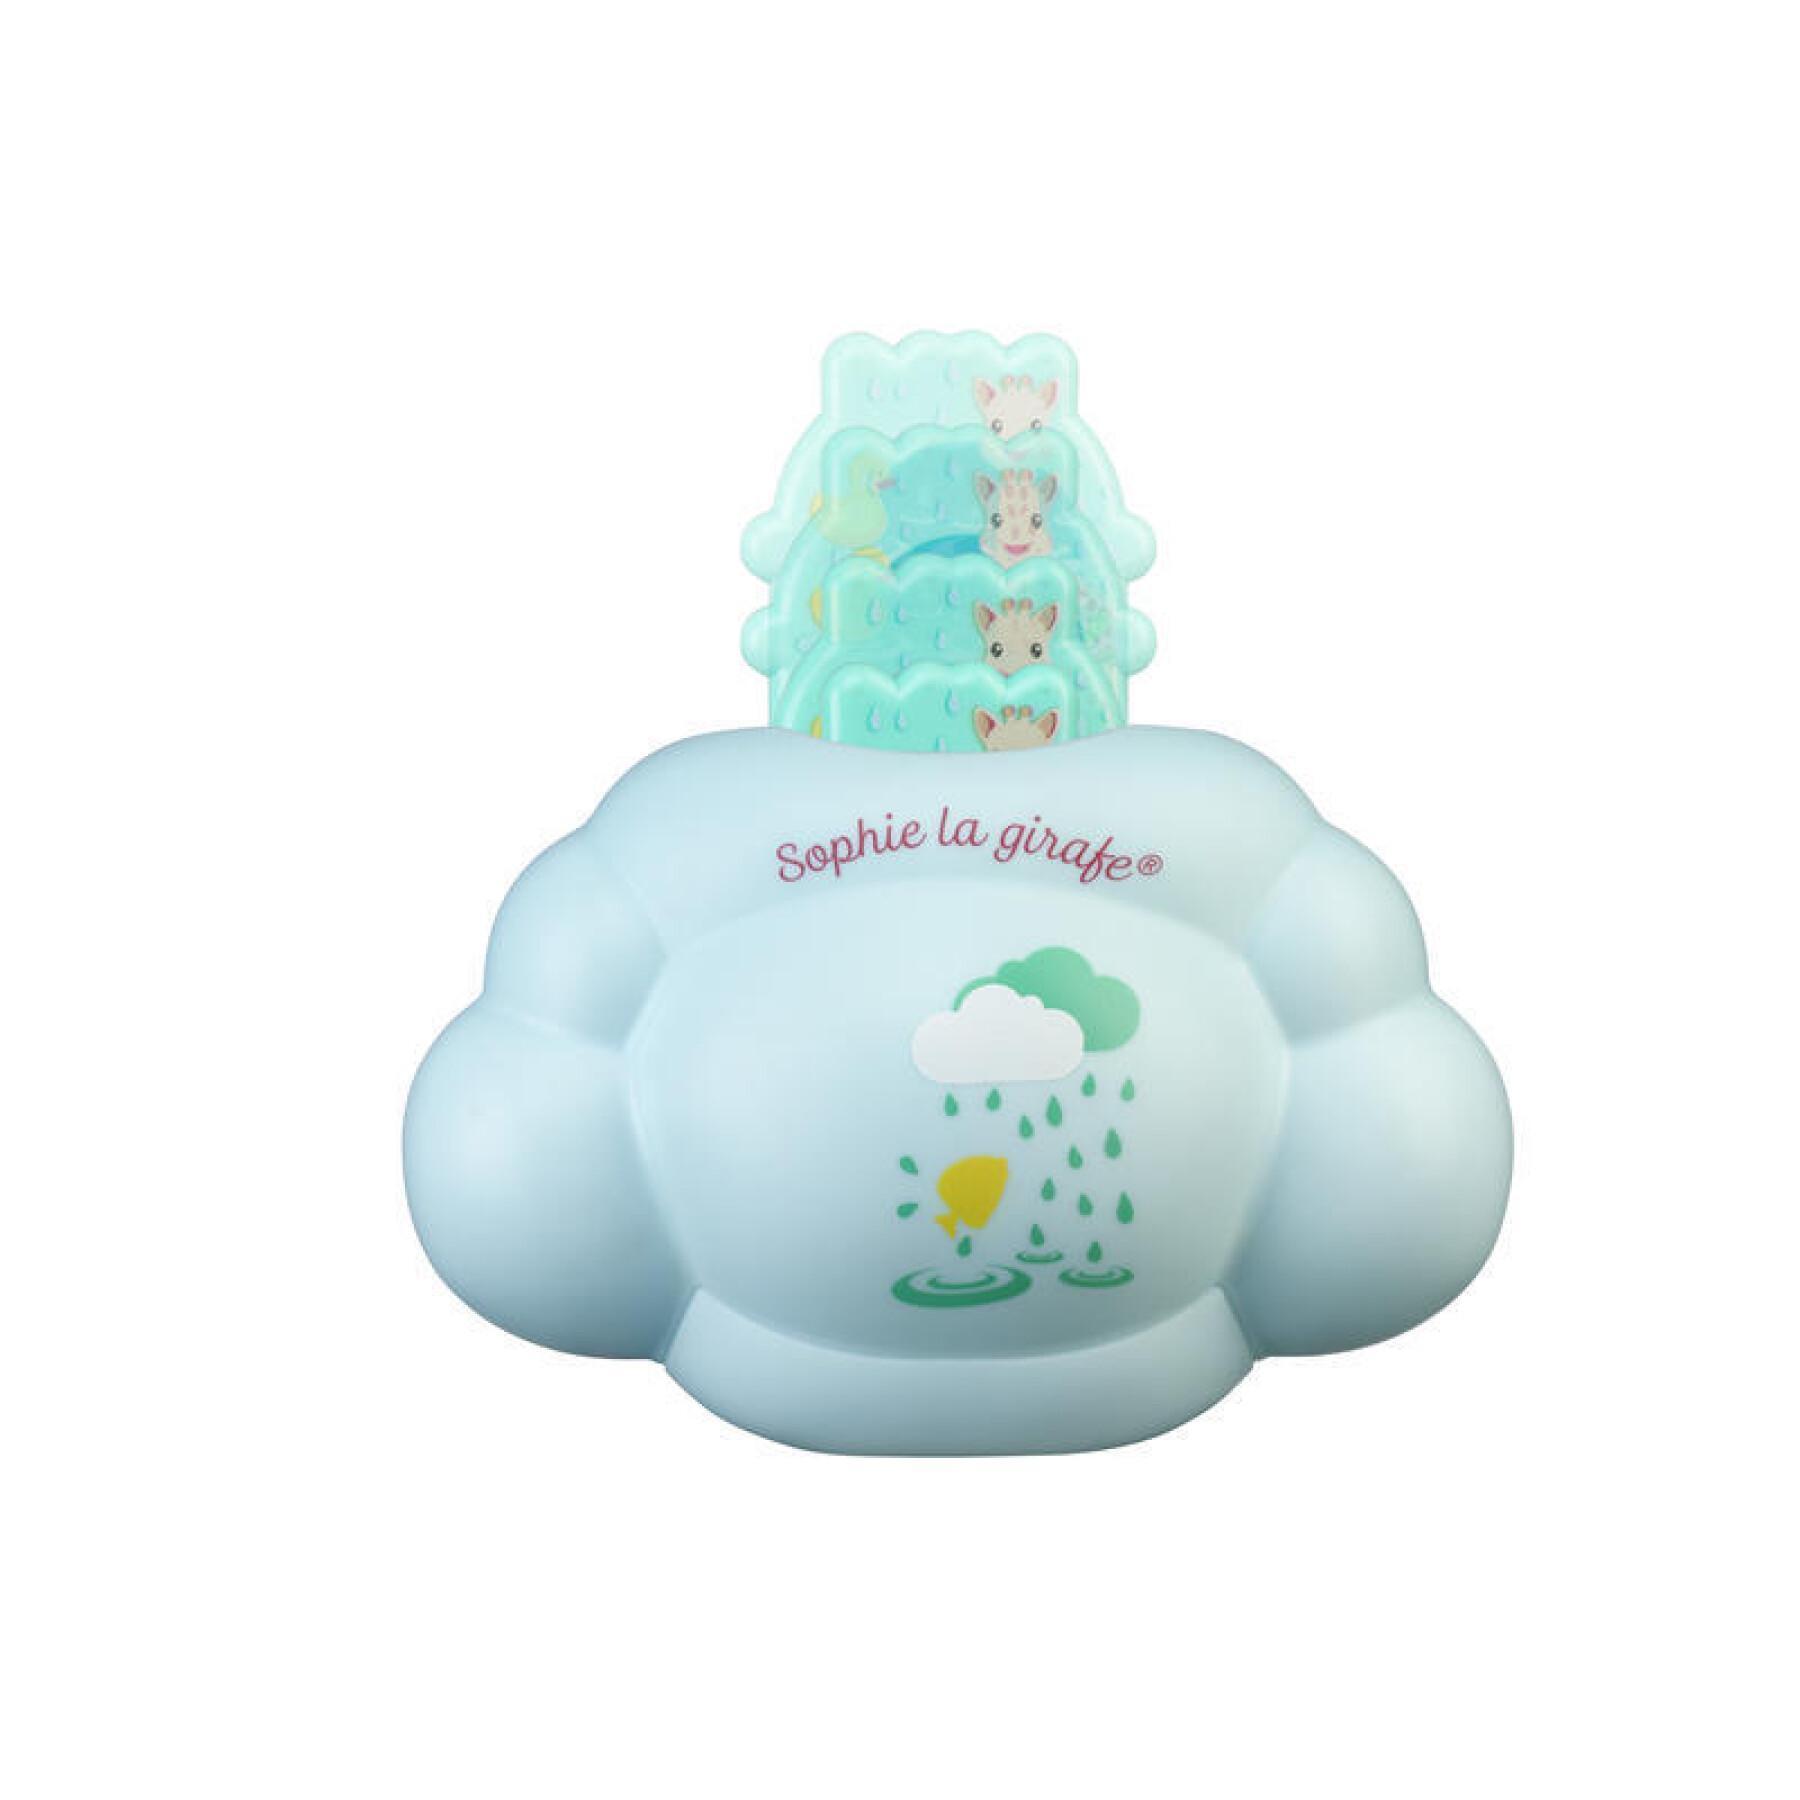 Early-learning games bath cloud Vulli Jouets Sophie